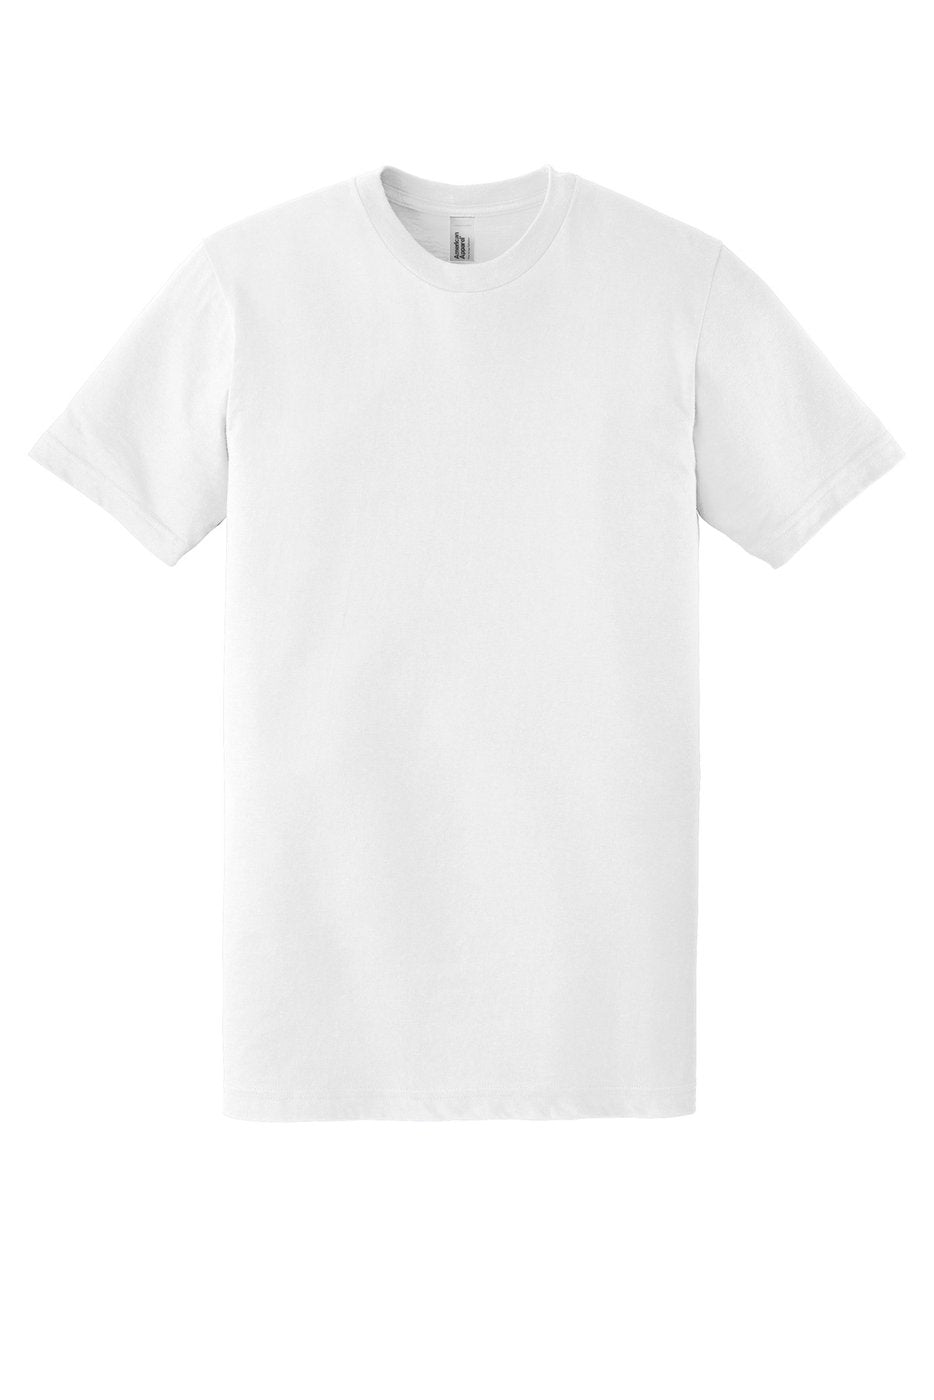 White S&S American Apparel Unisex Fine Jersey T-Shirt